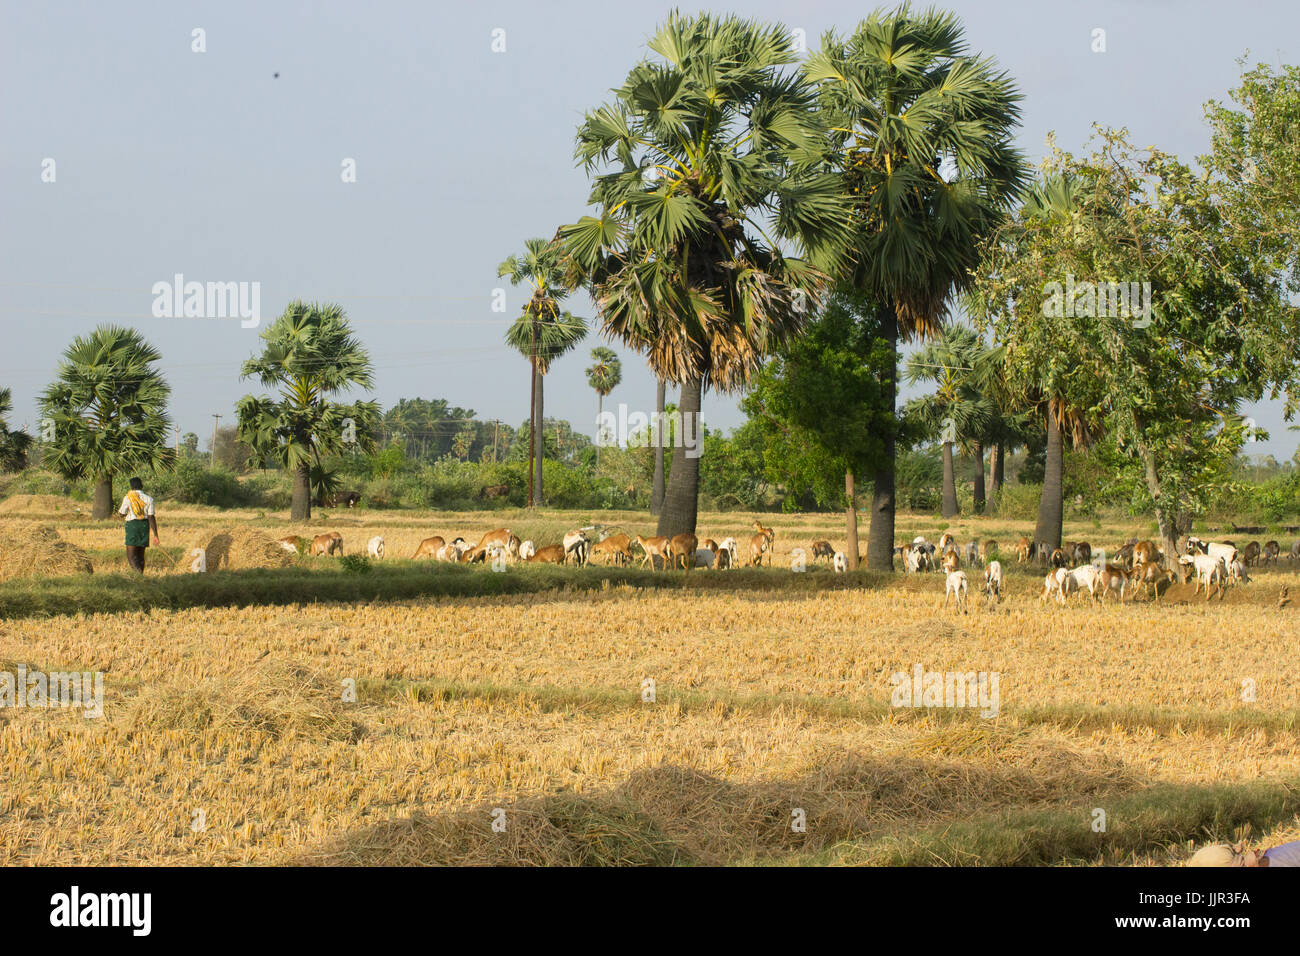 Rice paddy field in Tamilnadu, India. Stock Photo